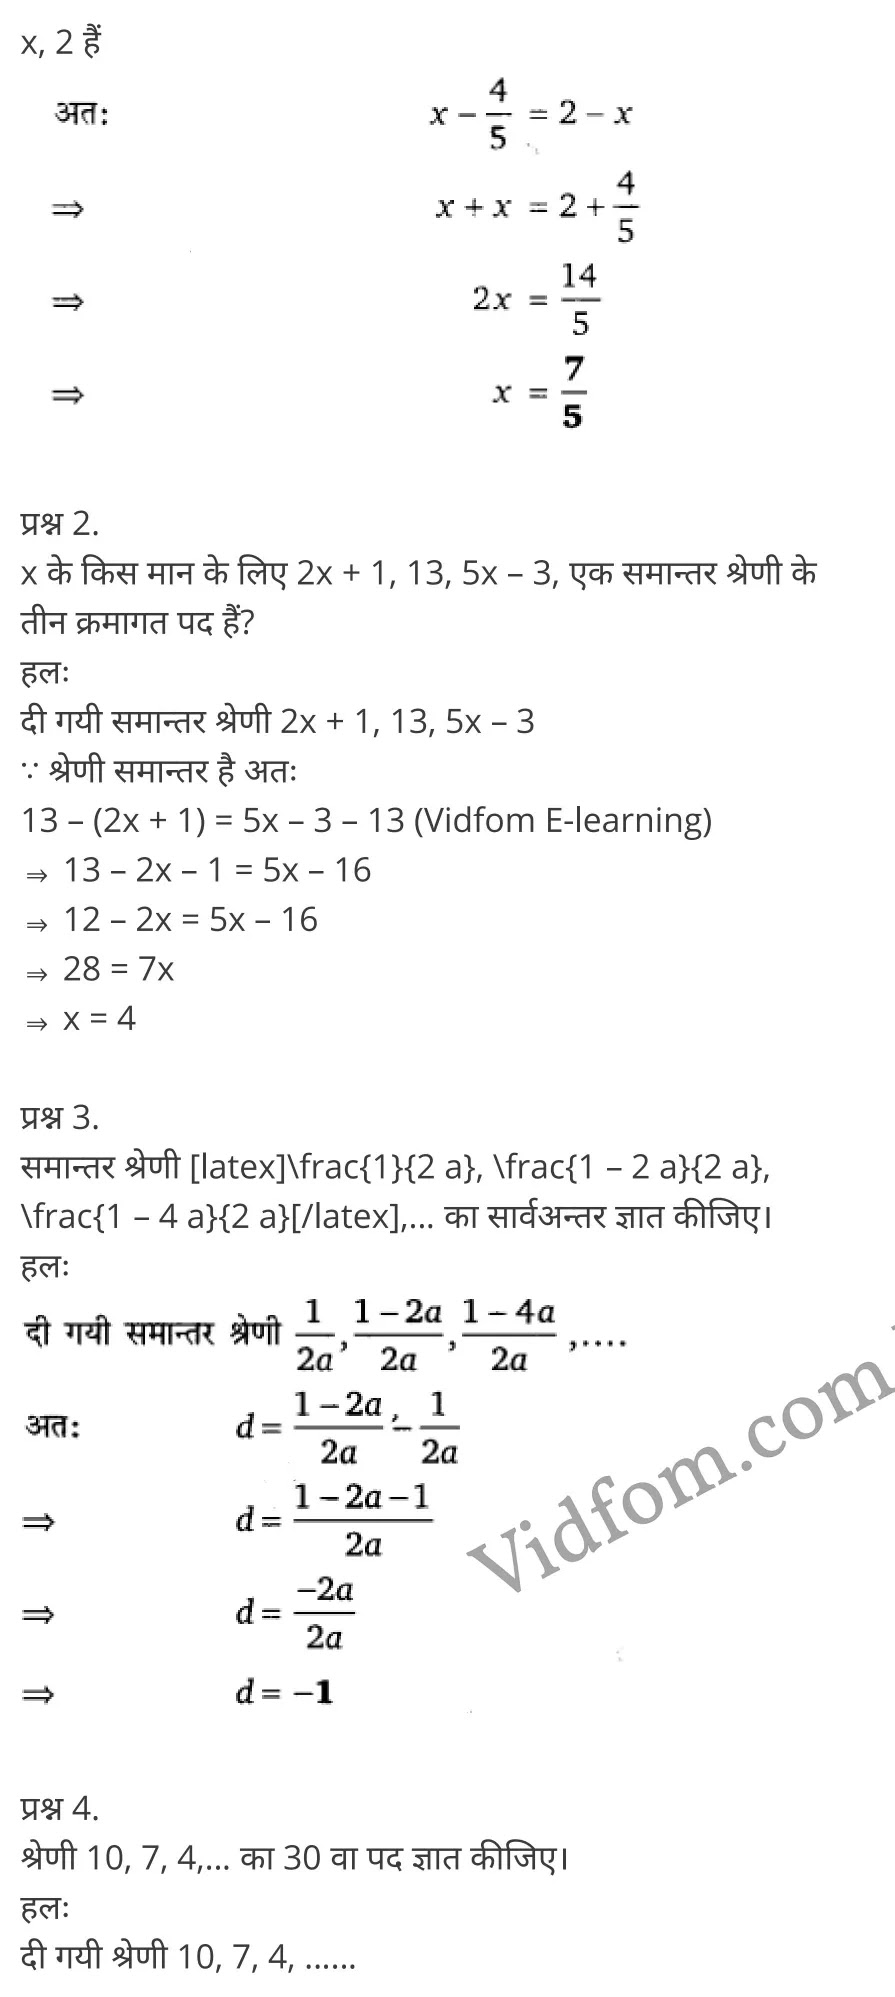 Chapter 5 Quadratic Equations Ex 5.1 Chapter 5 Quadratic Equations Ex 5.2 Chapter 5 Quadratic Equations Ex 5.3 Chapter 5 Quadratic Equations Ex 5.4 Chapter 5 Quadratic Equations Ex 5.5 कक्षा 10 बालाजी गणित  के नोट्स  हिंदी में एनसीईआरटी समाधान,     class 10 Balaji Maths Chapter 5,   class 10 Balaji Maths Chapter 5 ncert solutions in Hindi,   class 10 Balaji Maths Chapter 5 notes in hindi,   class 10 Balaji Maths Chapter 5 question answer,   class 10 Balaji Maths Chapter 5 notes,   class 10 Balaji Maths Chapter 5 class 10 Balaji Maths Chapter 5 in  hindi,    class 10 Balaji Maths Chapter 5 important questions in  hindi,   class 10 Balaji Maths Chapter 5 notes in hindi,    class 10 Balaji Maths Chapter 5 test,   class 10 Balaji Maths Chapter 5 pdf,   class 10 Balaji Maths Chapter 5 notes pdf,   class 10 Balaji Maths Chapter 5 exercise solutions,   class 10 Balaji Maths Chapter 5 notes study rankers,   class 10 Balaji Maths Chapter 5 notes,    class 10 Balaji Maths Chapter 5  class 10  notes pdf,   class 10 Balaji Maths Chapter 5 class 10  notes  ncert,   class 10 Balaji Maths Chapter 5 class 10 pdf,   class 10 Balaji Maths Chapter 5  book,   class 10 Balaji Maths Chapter 5 quiz class 10  ,    10  th class 10 Balaji Maths Chapter 5  book up board,   up board 10  th class 10 Balaji Maths Chapter 5 notes,  class 10 Balaji Maths,   class 10 Balaji Maths ncert solutions in Hindi,   class 10 Balaji Maths notes in hindi,   class 10 Balaji Maths question answer,   class 10 Balaji Maths notes,  class 10 Balaji Maths class 10 Balaji Maths Chapter 5 in  hindi,    class 10 Balaji Maths important questions in  hindi,   class 10 Balaji Maths notes in hindi,    class 10 Balaji Maths test,  class 10 Balaji Maths class 10 Balaji Maths Chapter 5 pdf,   class 10 Balaji Maths notes pdf,   class 10 Balaji Maths exercise solutions,   class 10 Balaji Maths,  class 10 Balaji Maths notes study rankers,   class 10 Balaji Maths notes,  class 10 Balaji Maths notes,   class 10 Balaji Maths  class 10  notes pdf,   class 10 Balaji Maths class 10  notes  ncert,   class 10 Balaji Maths class 10 pdf,   class 10 Balaji Maths  book,  class 10 Balaji Maths quiz class 10  ,  10  th class 10 Balaji Maths    book up board,    up board 10  th class 10 Balaji Maths notes,      कक्षा 10 बालाजी गणित अध्याय 5 ,  कक्षा 10 बालाजी गणित, कक्षा 10 बालाजी गणित अध्याय 5  के नोट्स हिंदी में,  कक्षा 10 का हिंदी अध्याय 5 का प्रश्न उत्तर,  कक्षा 10 बालाजी गणित अध्याय 5  के नोट्स,  10 कक्षा बालाजी गणित  हिंदी में, कक्षा 10 बालाजी गणित अध्याय 5  हिंदी में,  कक्षा 10 बालाजी गणित अध्याय 5  महत्वपूर्ण प्रश्न हिंदी में, कक्षा 10   हिंदी के नोट्स  हिंदी में, बालाजी गणित हिंदी में  कक्षा 10 नोट्स pdf,    बालाजी गणित हिंदी में  कक्षा 10 नोट्स 2021 ncert,   बालाजी गणित हिंदी  कक्षा 10 pdf,   बालाजी गणित हिंदी में  पुस्तक,   बालाजी गणित हिंदी में की बुक,   बालाजी गणित हिंदी में  प्रश्नोत्तरी class 10 ,  बिहार बोर्ड 10  पुस्तक वीं हिंदी नोट्स,    बालाजी गणित कक्षा 10 नोट्स 2021 ncert,   बालाजी गणित  कक्षा 10 pdf,   बालाजी गणित  पुस्तक,   बालाजी गणित  प्रश्नोत्तरी class 10, कक्षा 10 बालाजी गणित,  कक्षा 10 बालाजी गणित  के नोट्स हिंदी में,  कक्षा 10 का हिंदी का प्रश्न उत्तर,  कक्षा 10 बालाजी गणित  के नोट्स,  10 कक्षा हिंदी 2021  हिंदी में, कक्षा 10 बालाजी गणित  हिंदी में,  कक्षा 10 बालाजी गणित  महत्वपूर्ण प्रश्न हिंदी में, कक्षा 10 बालाजी गणित  नोट्स  हिंदी में,